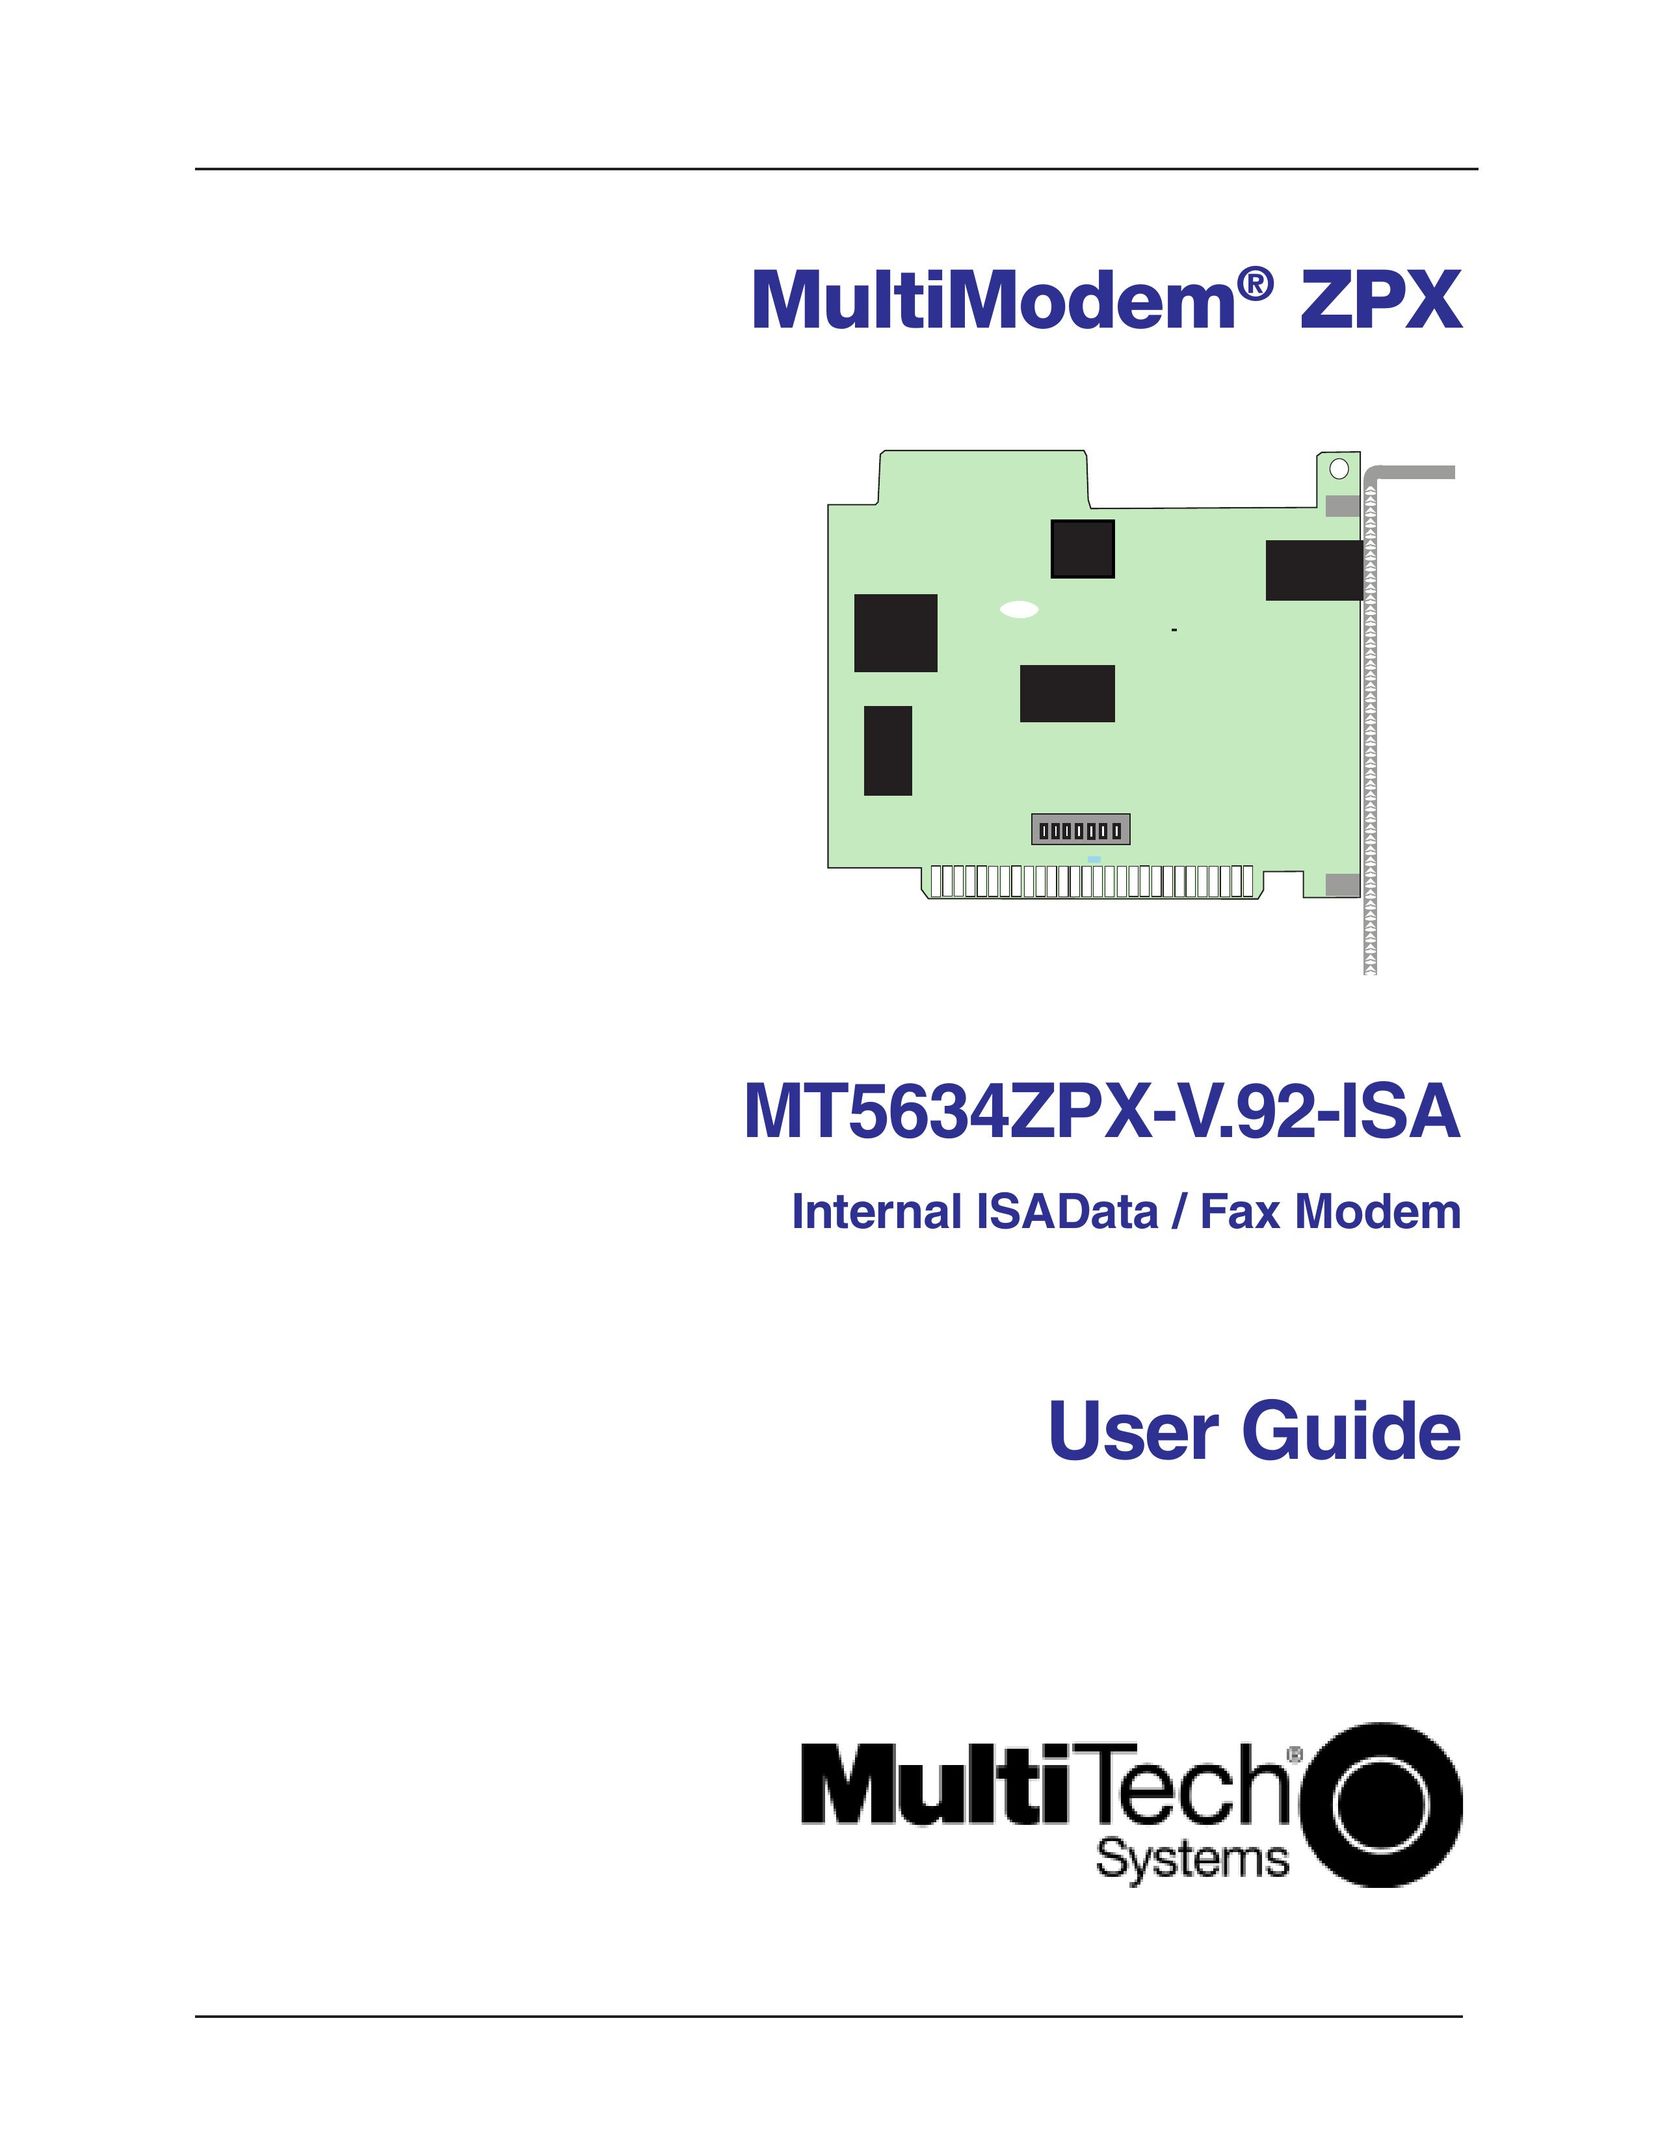 Multi-Tech Systems MT5634ZPX-V.92-ISA Modem User Manual